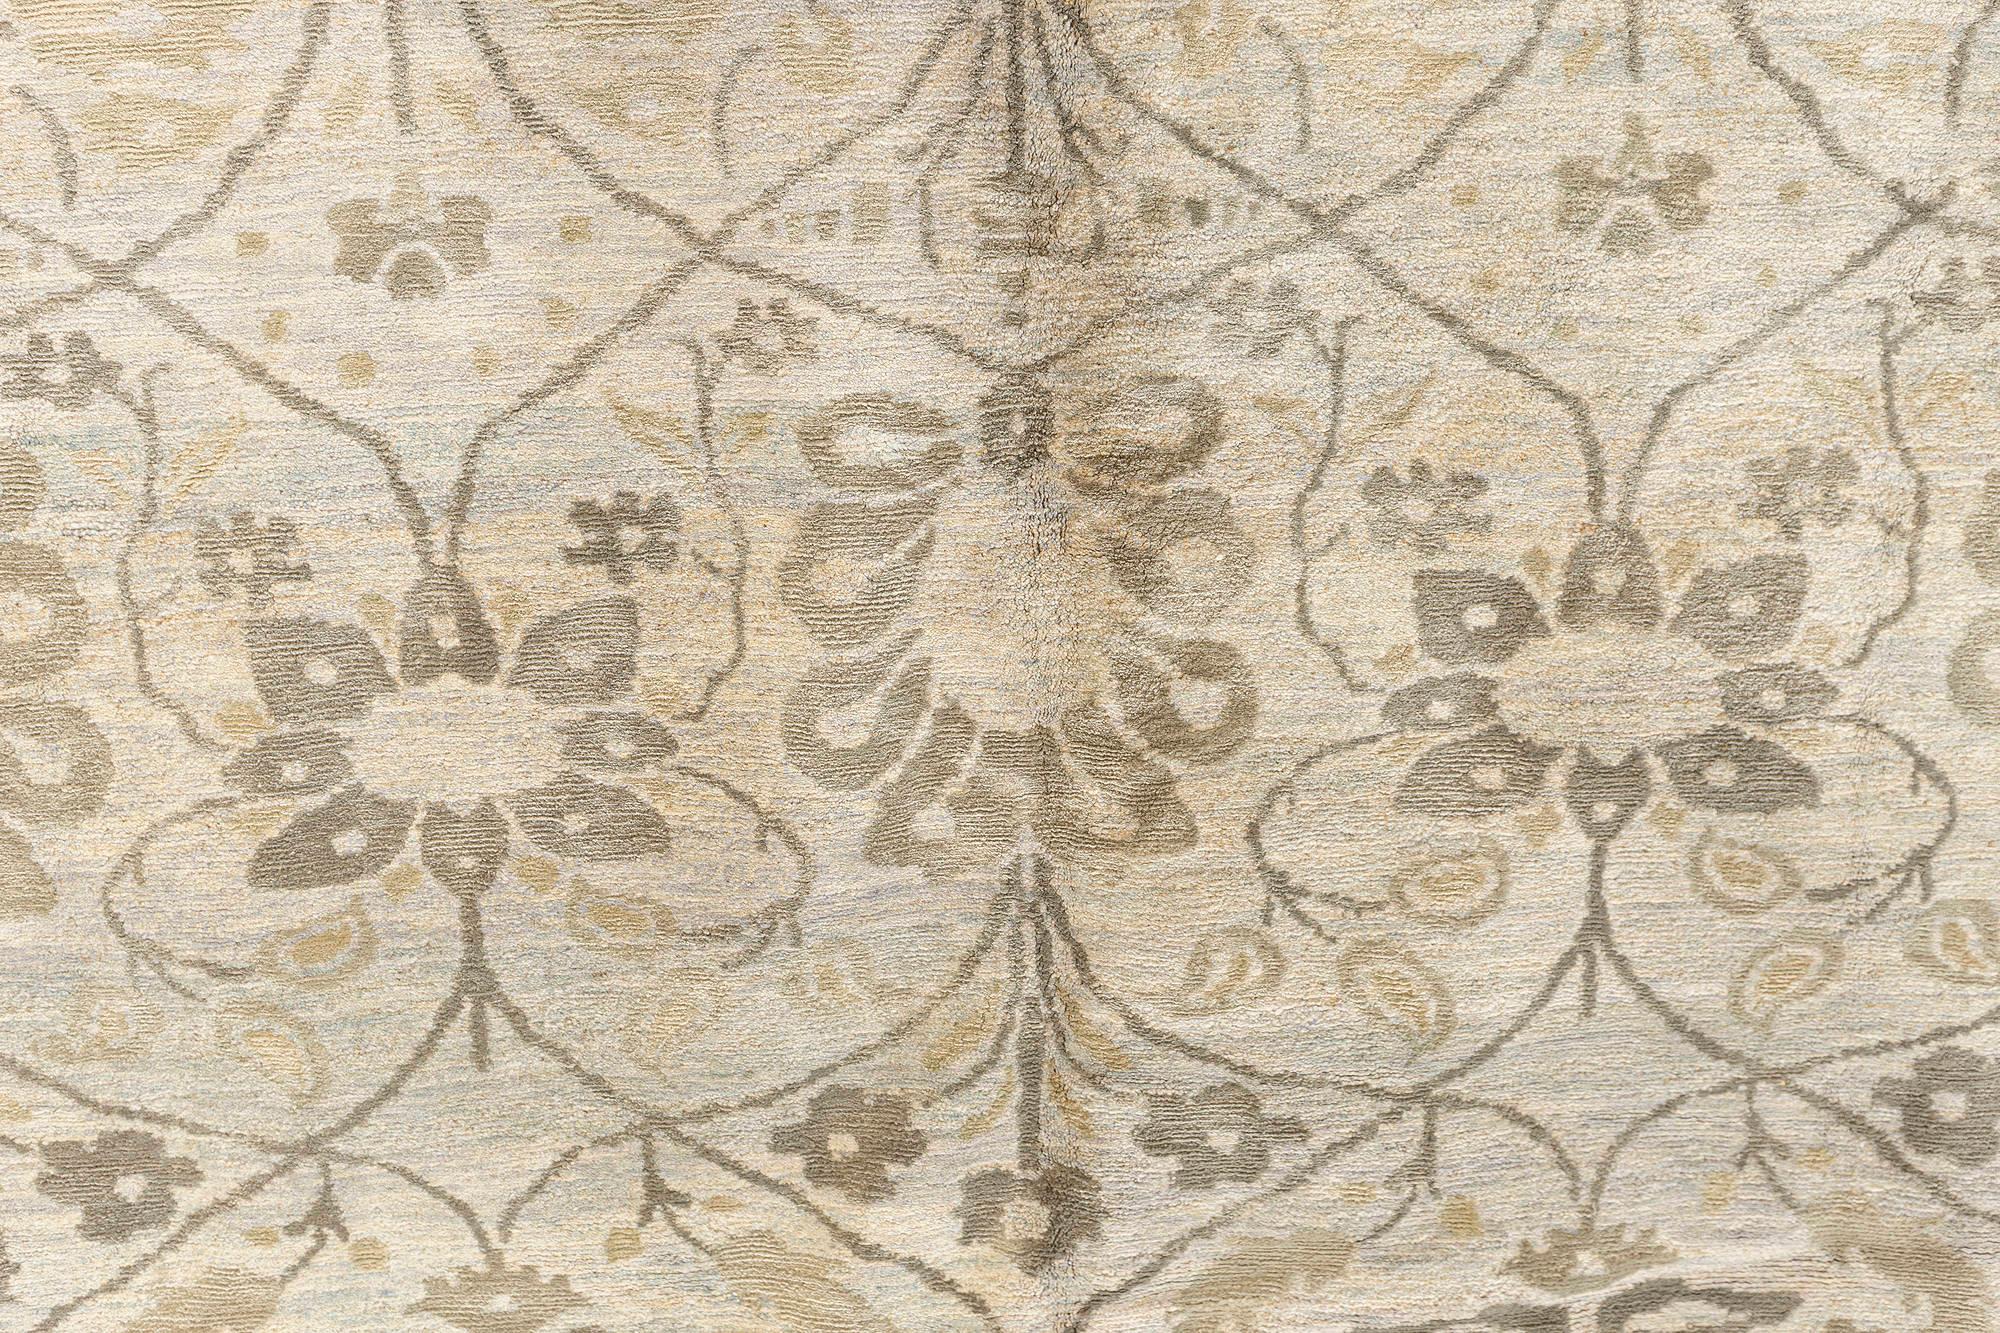 Contemporary Indian inspired botanic handmade rug by Doris Leslie Blau.
Size: 10.0